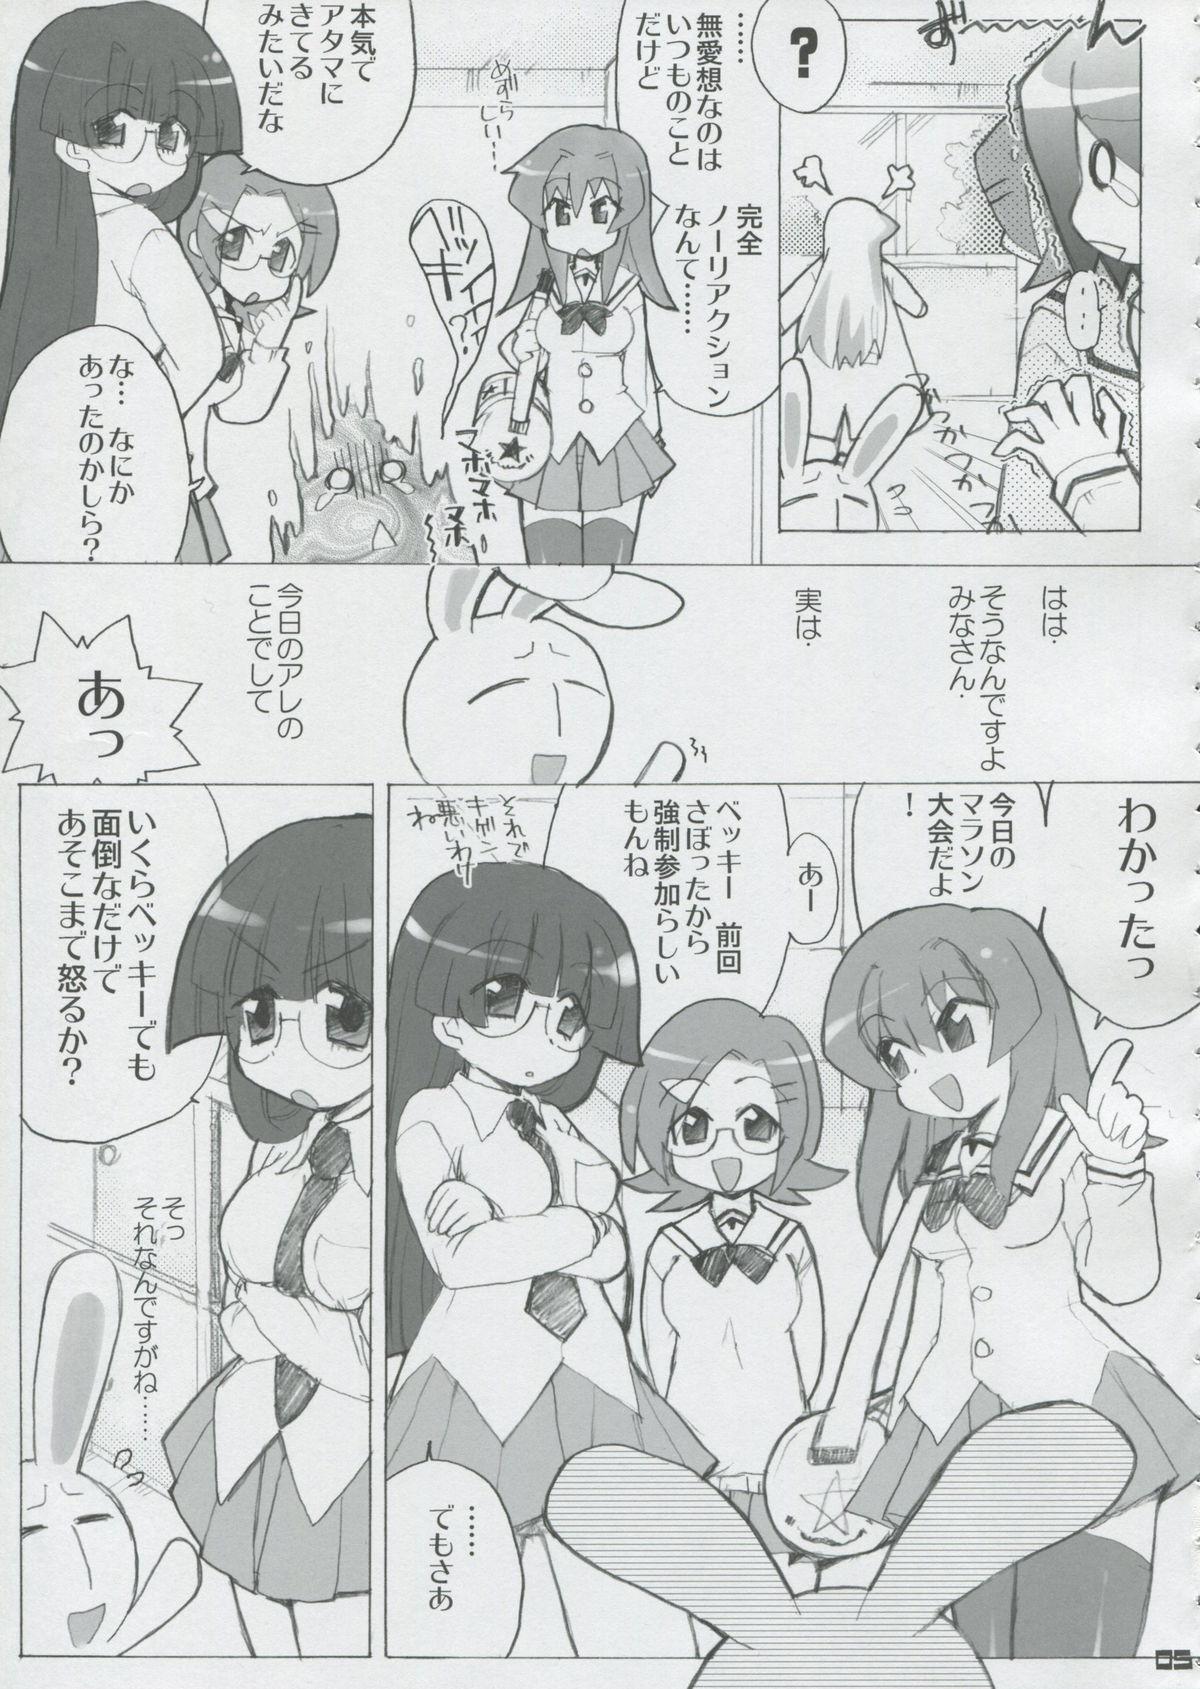 Buttfucking Momo Tsuki Monsters 1st-half - Pani poni dash Gayfuck - Page 4